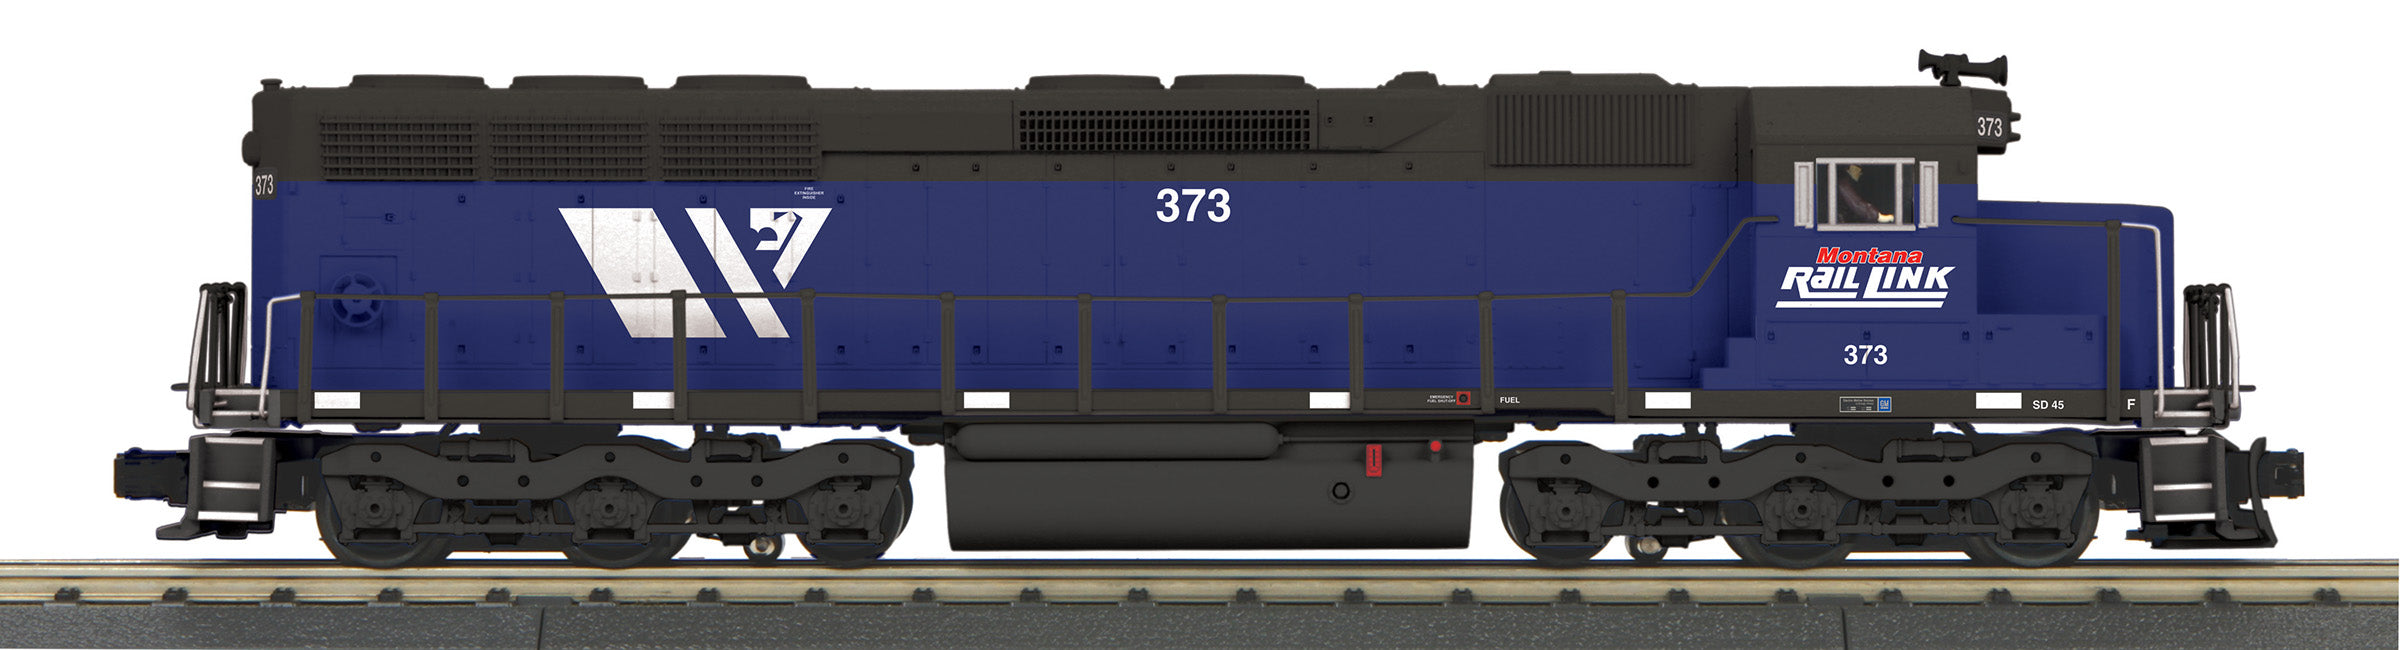 MTH 30-21120-1 - SD-45 Diesel Engine "Montana Rail Link" #373 w/ PS3